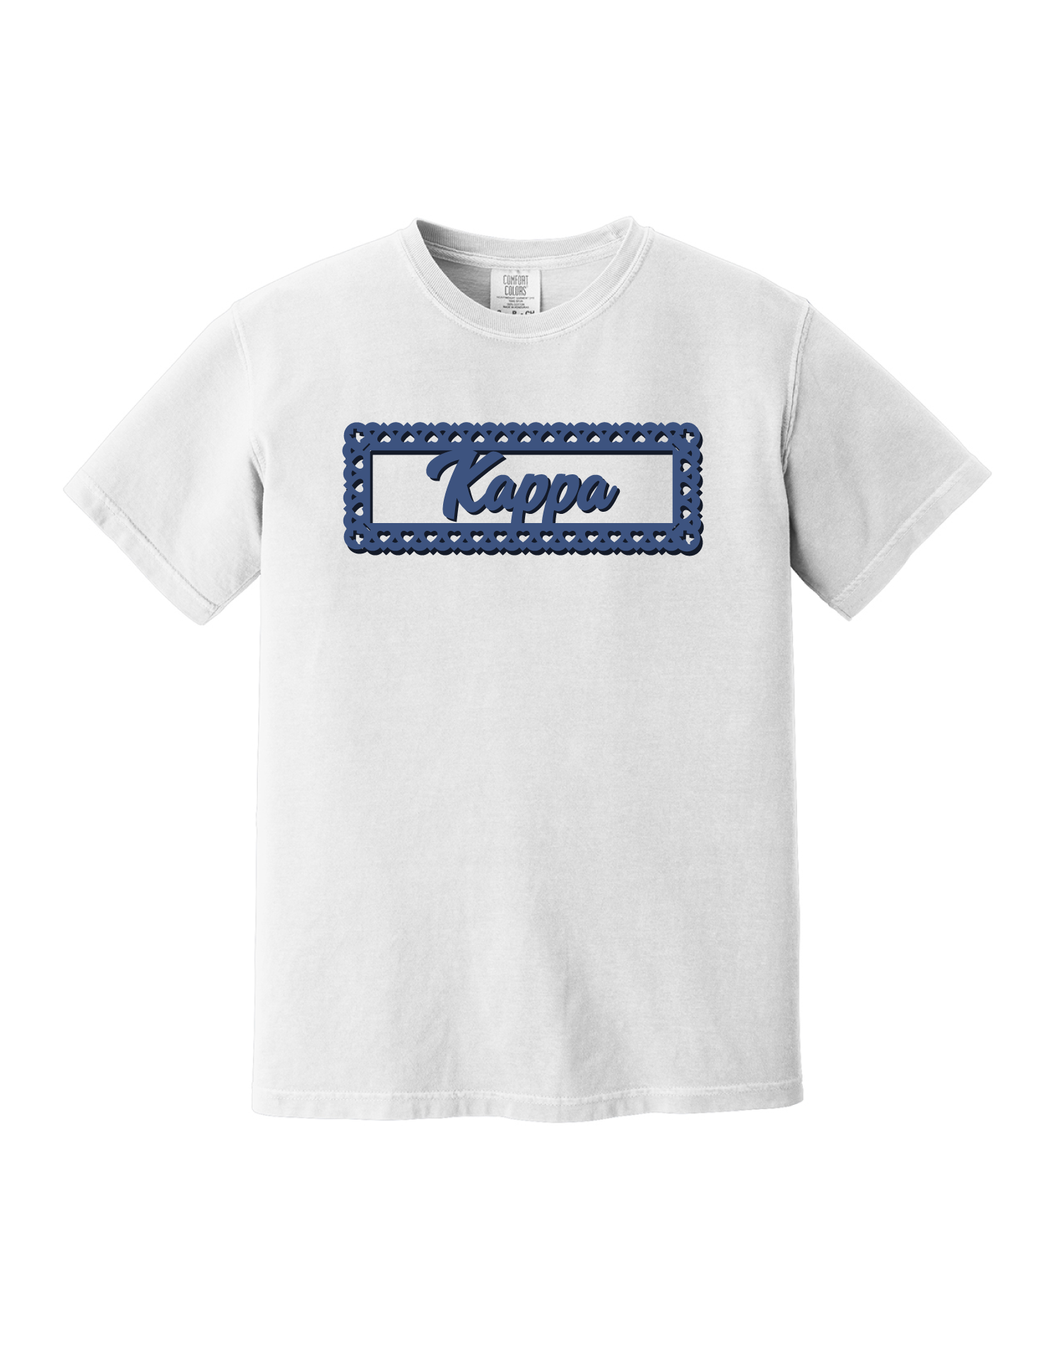 Ongrijpbaar Verrijking Triviaal Cute Border Design- Kappa Kappa Gamma short sleeve Tee – Brown Bag Etc